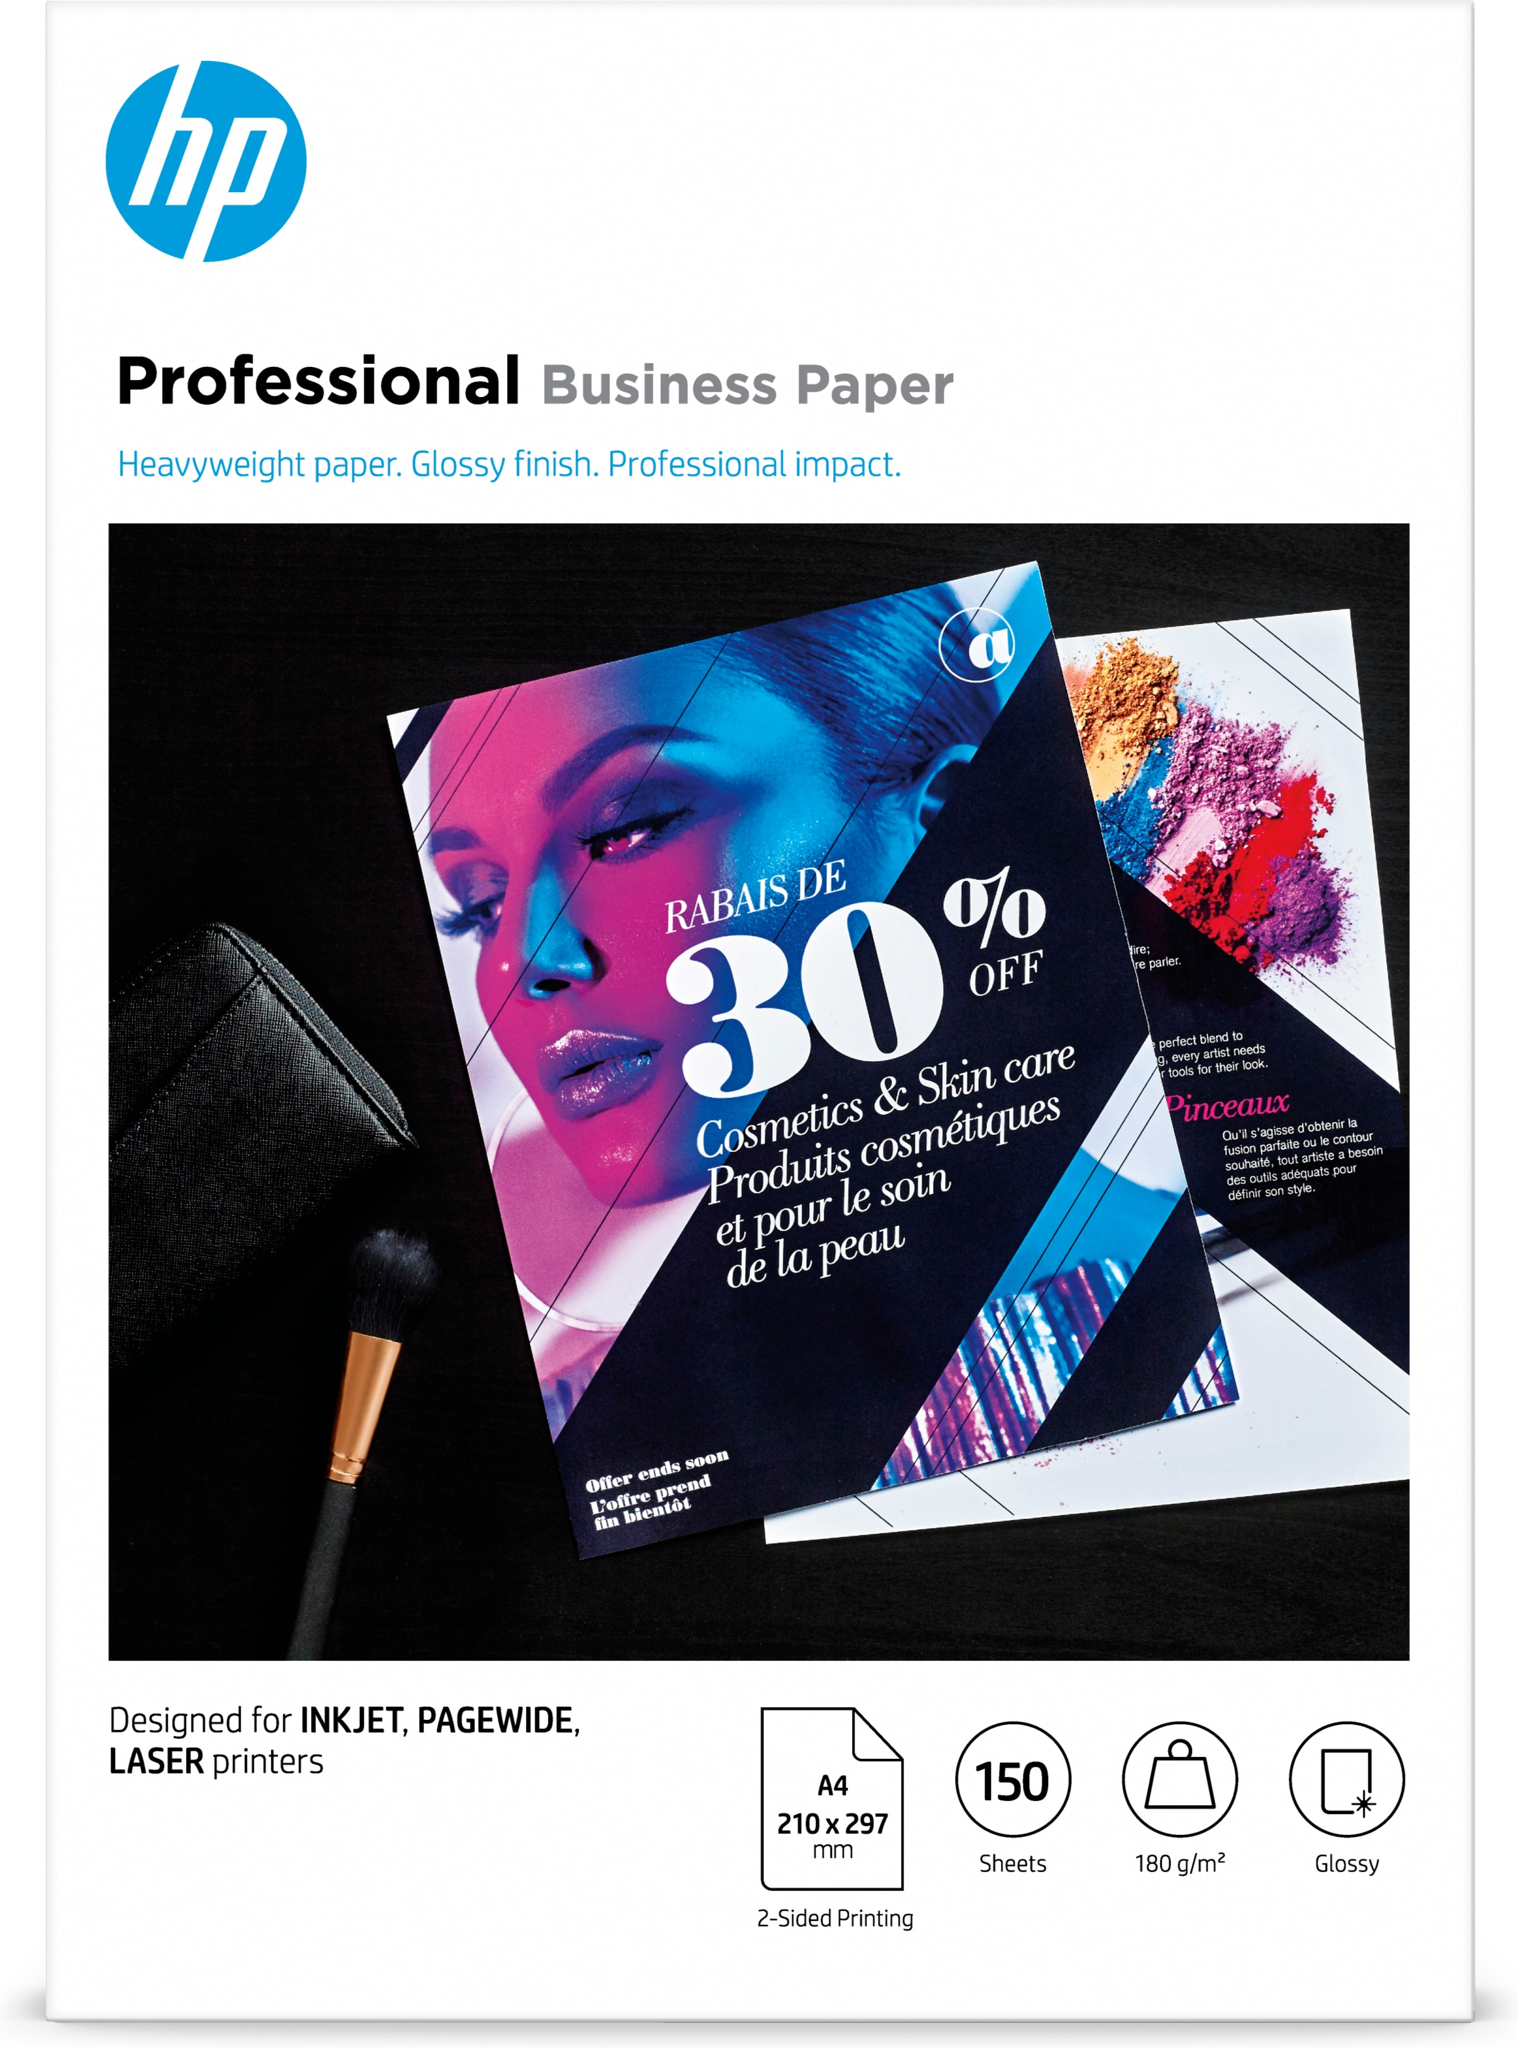 Bild von HP Professional Business Paper - Glossy - 180 g/m2 - A4 (210 x 297 mm) - 150 sheets - Universal - A4 (210x297 mm) - Glanz - 150 Blätter - 180 g/m² - Weiß